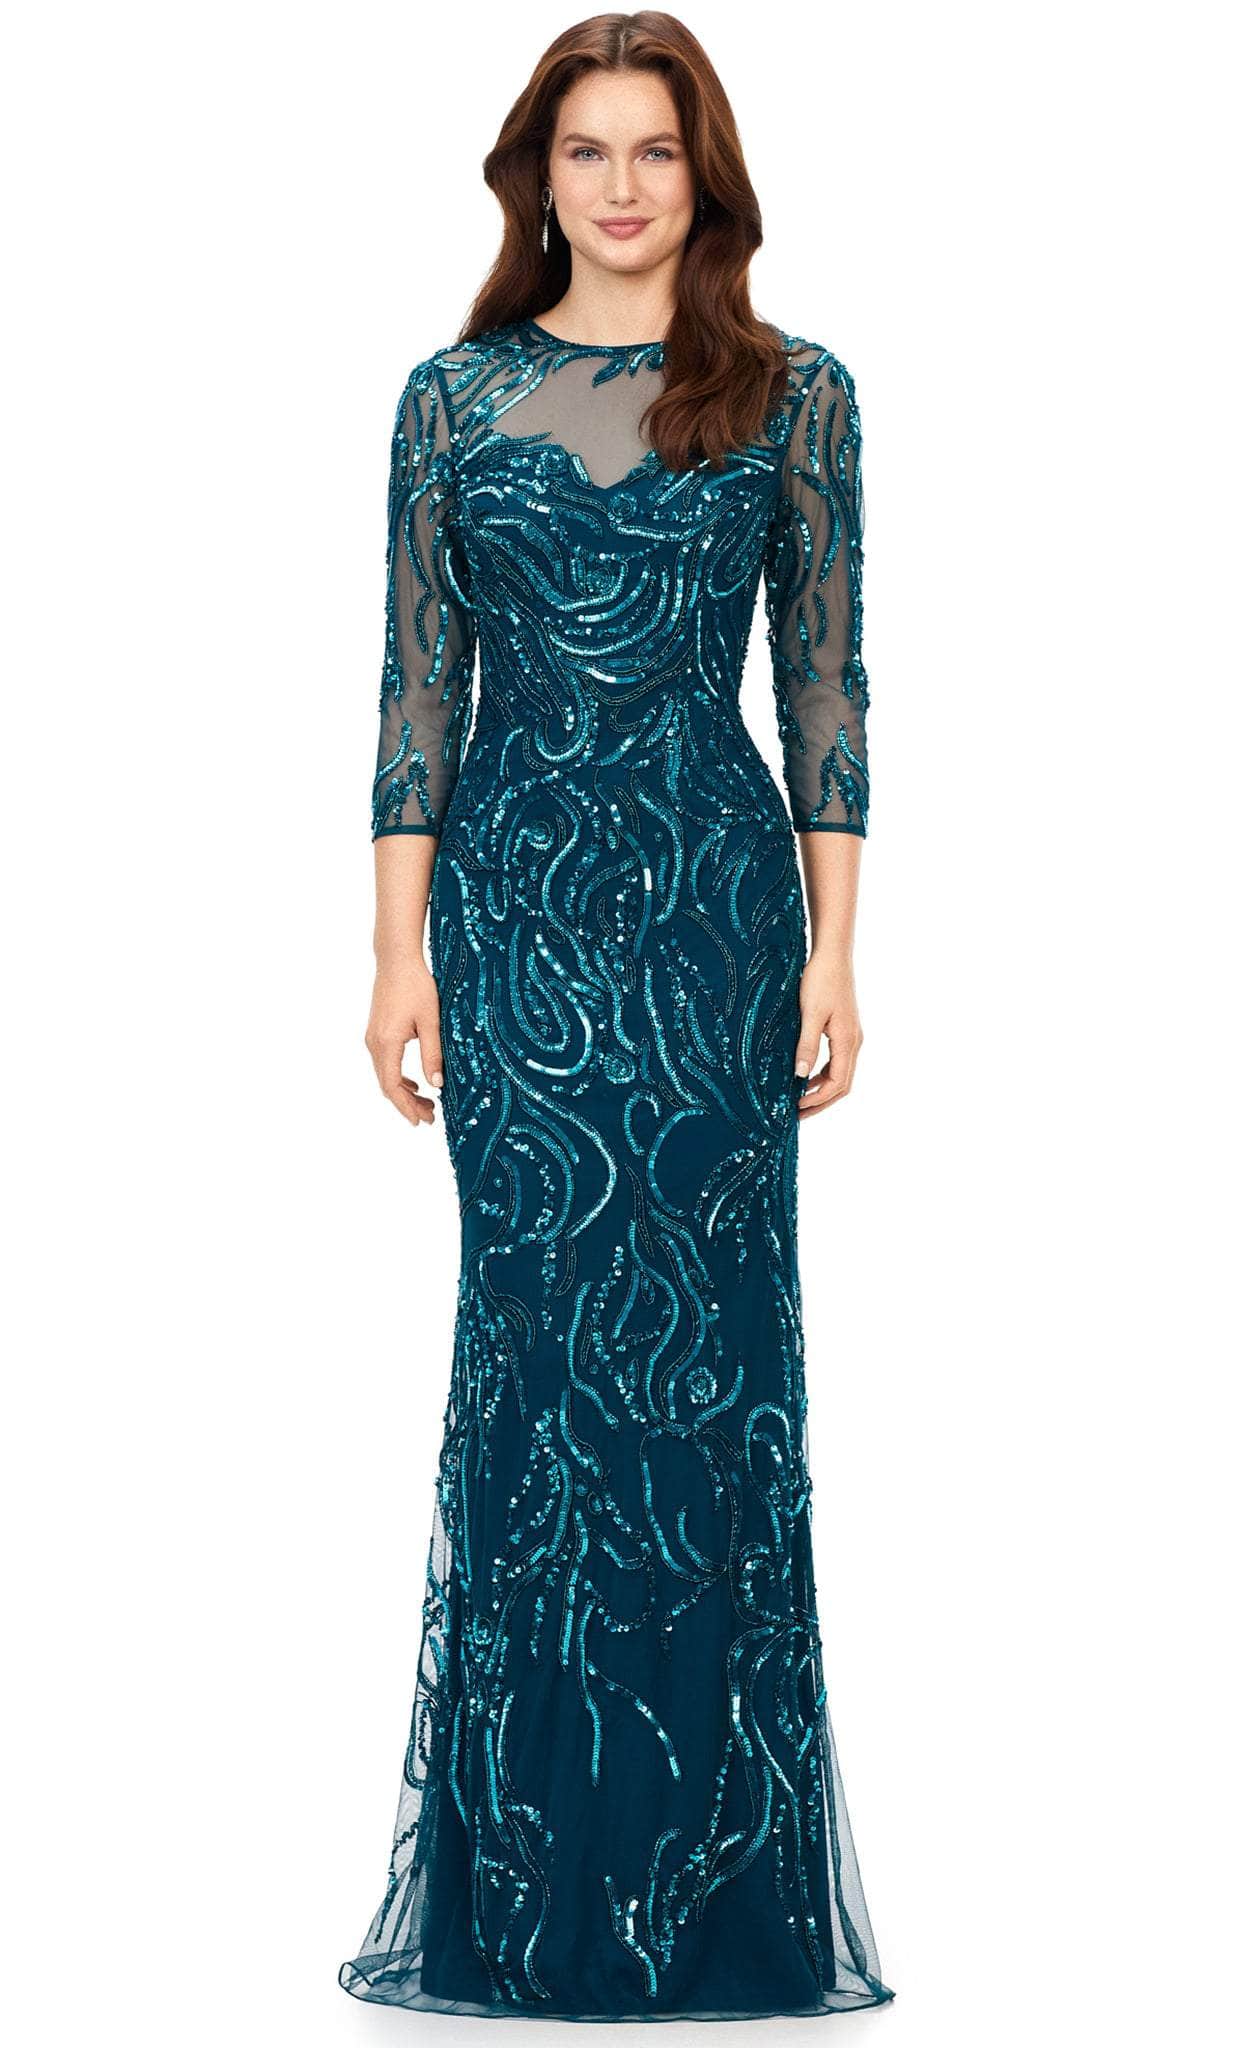 Ashley Lauren 11208 - Illusion Neckline Beaded Evening Gown Special Occasion Dress 0 / Dark Teal